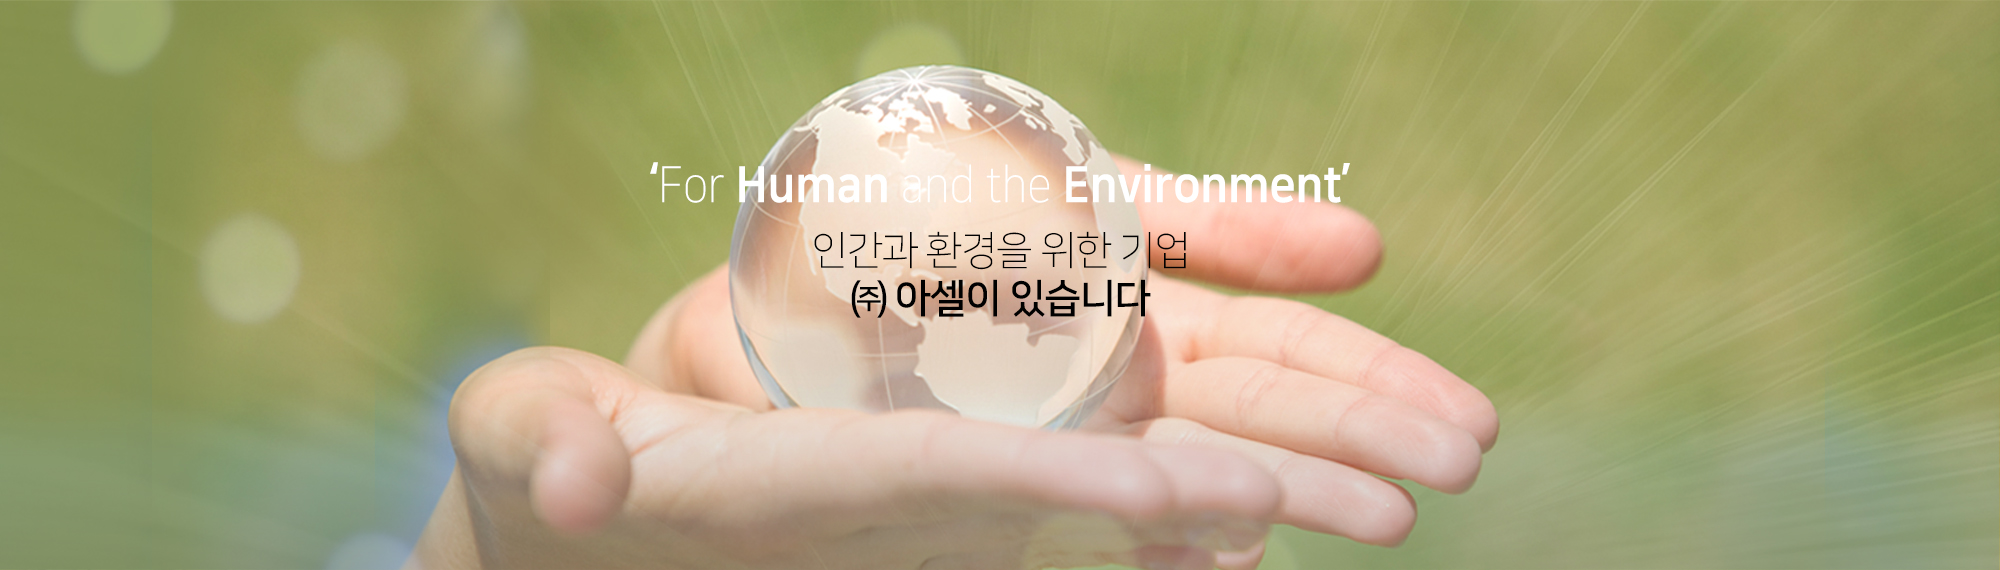 For Human and the Environment, 인간과 환경을 위한 기업  ㈜ 아셀이 있습니다